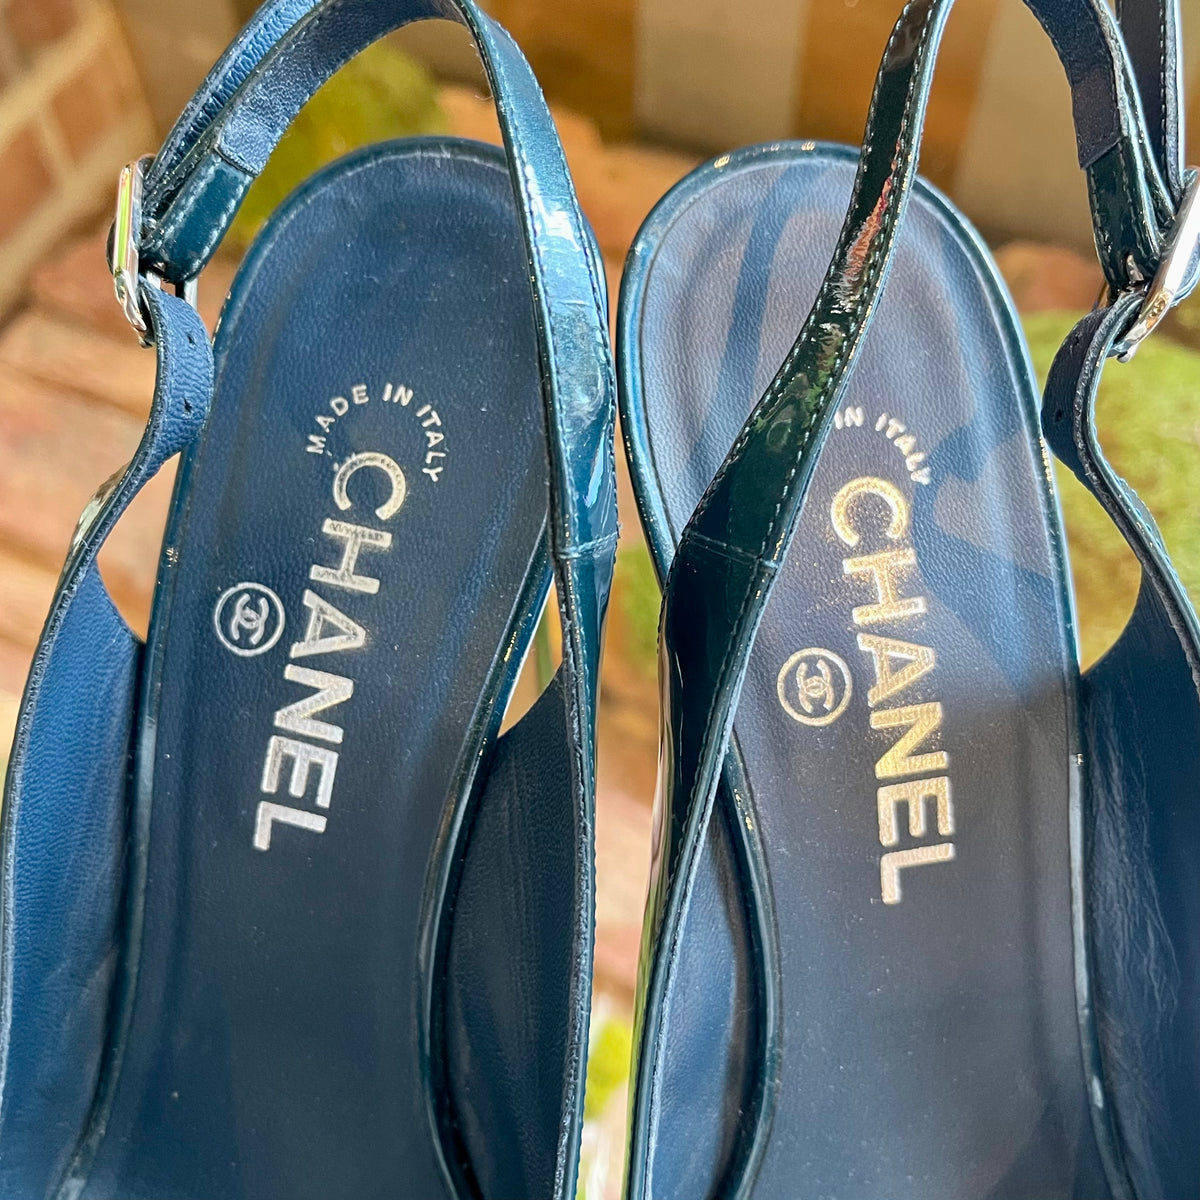 CHANEL Teal Blue Patent Open Toe Platform Slingback Sandals Sz 40